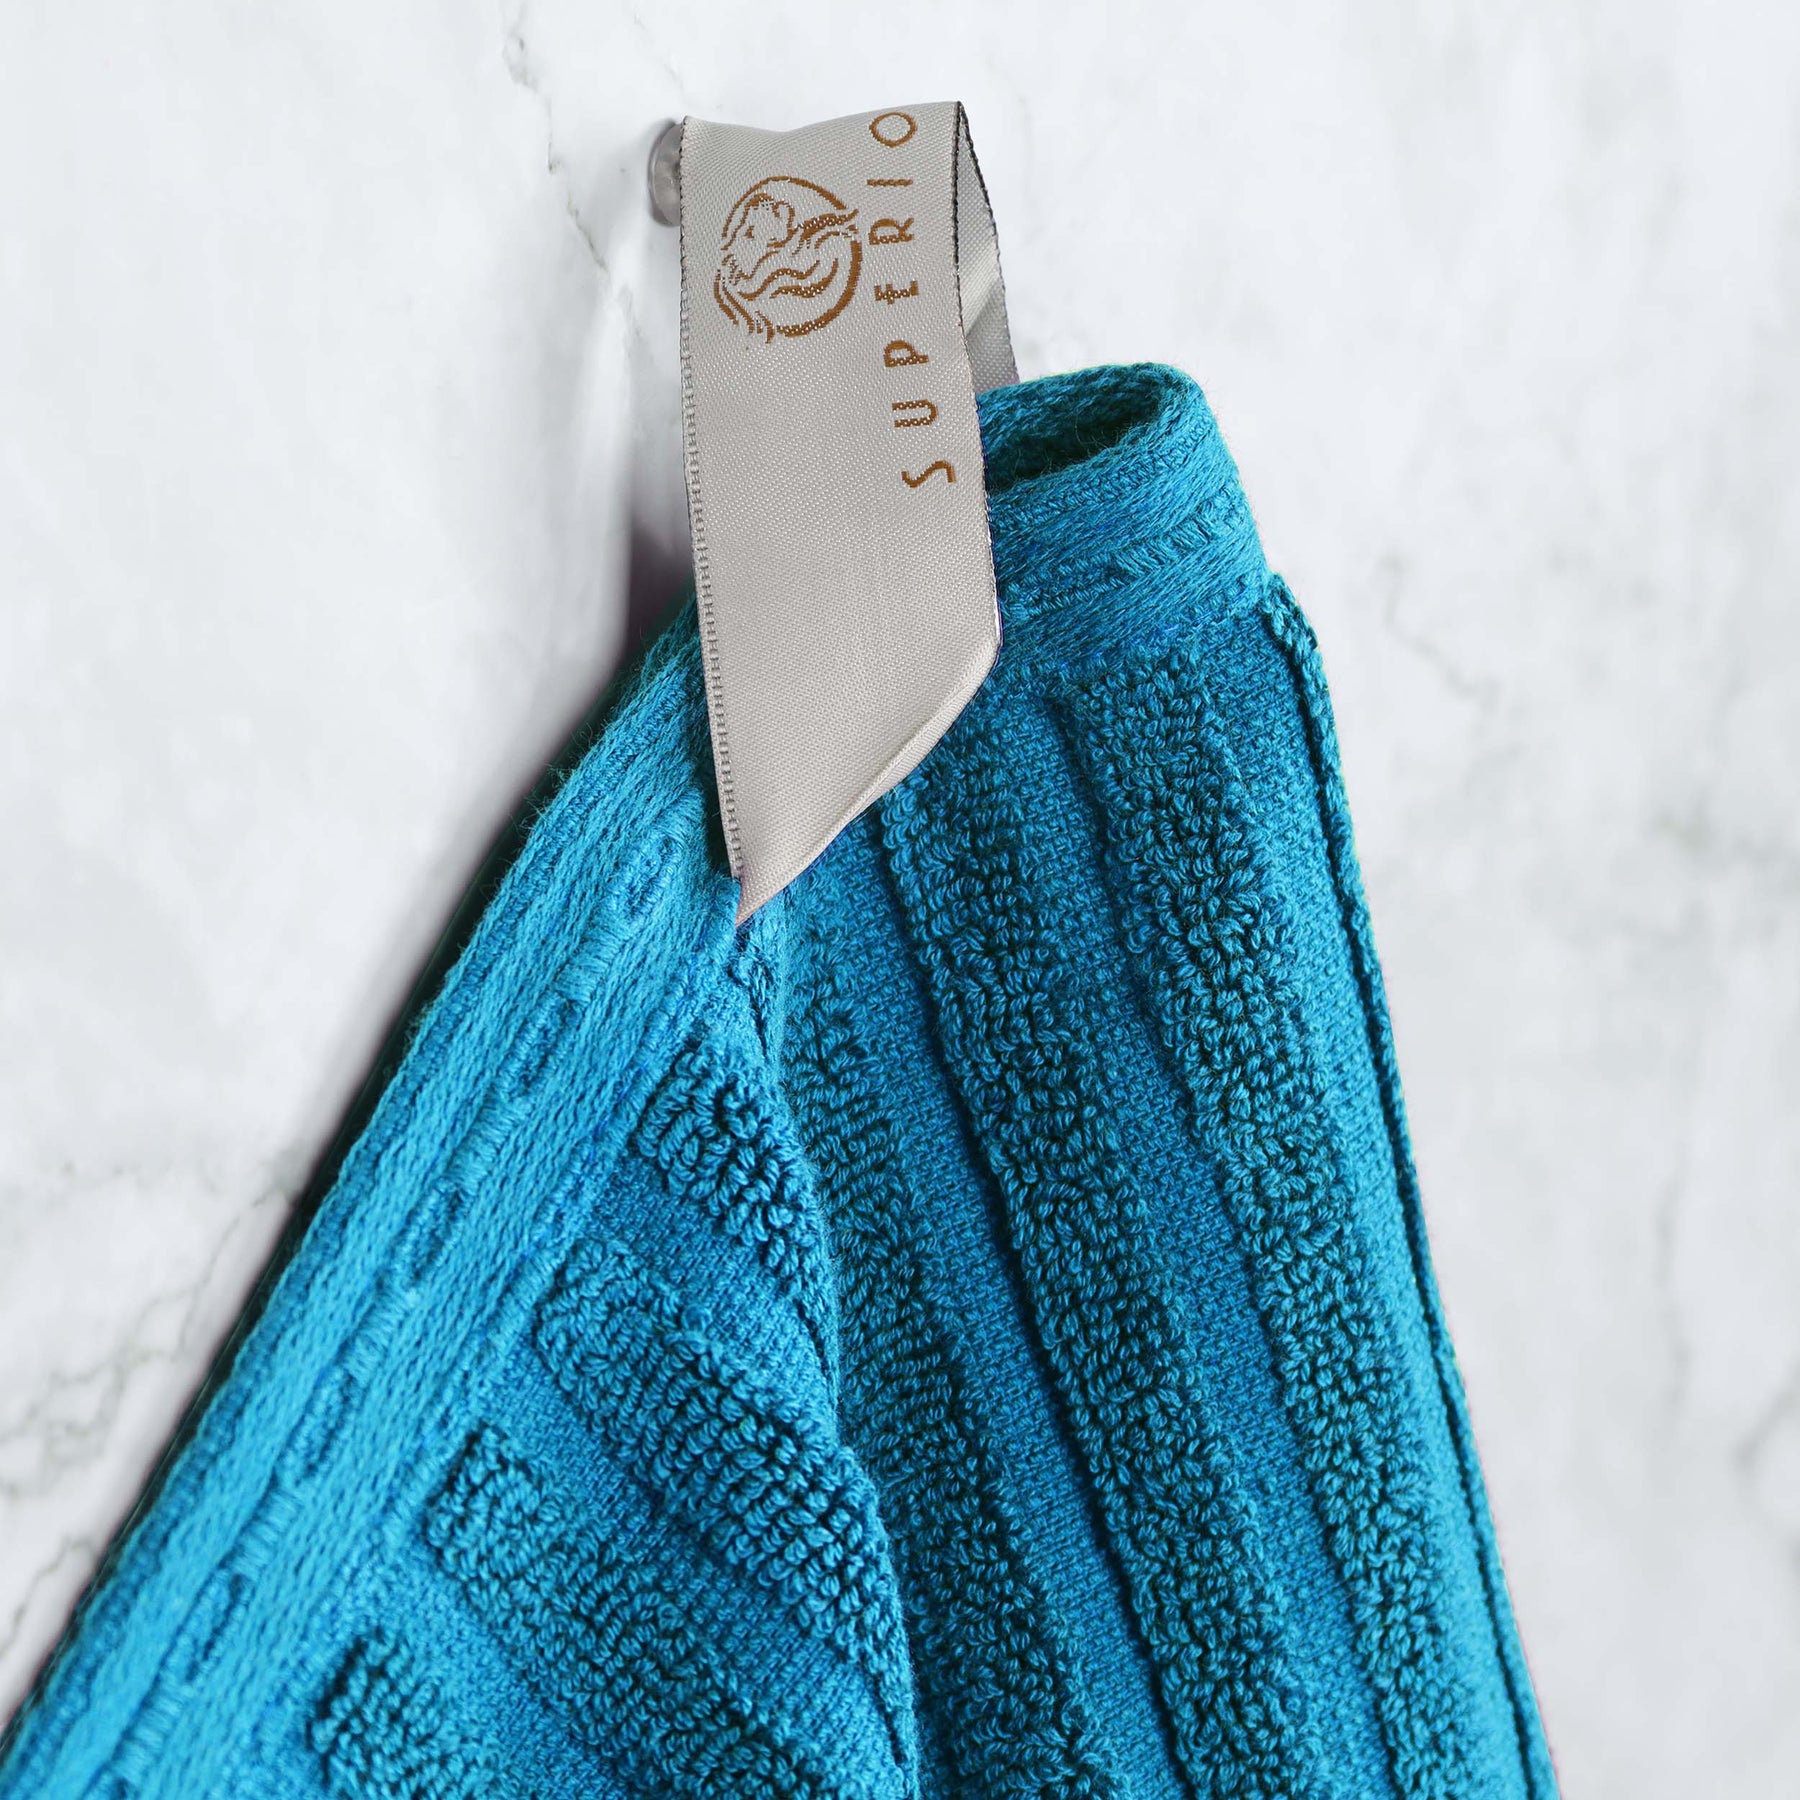 Ribbed Textured Cotton Ultra-Absorbent 4 Piece Hand Towel Set - Azure